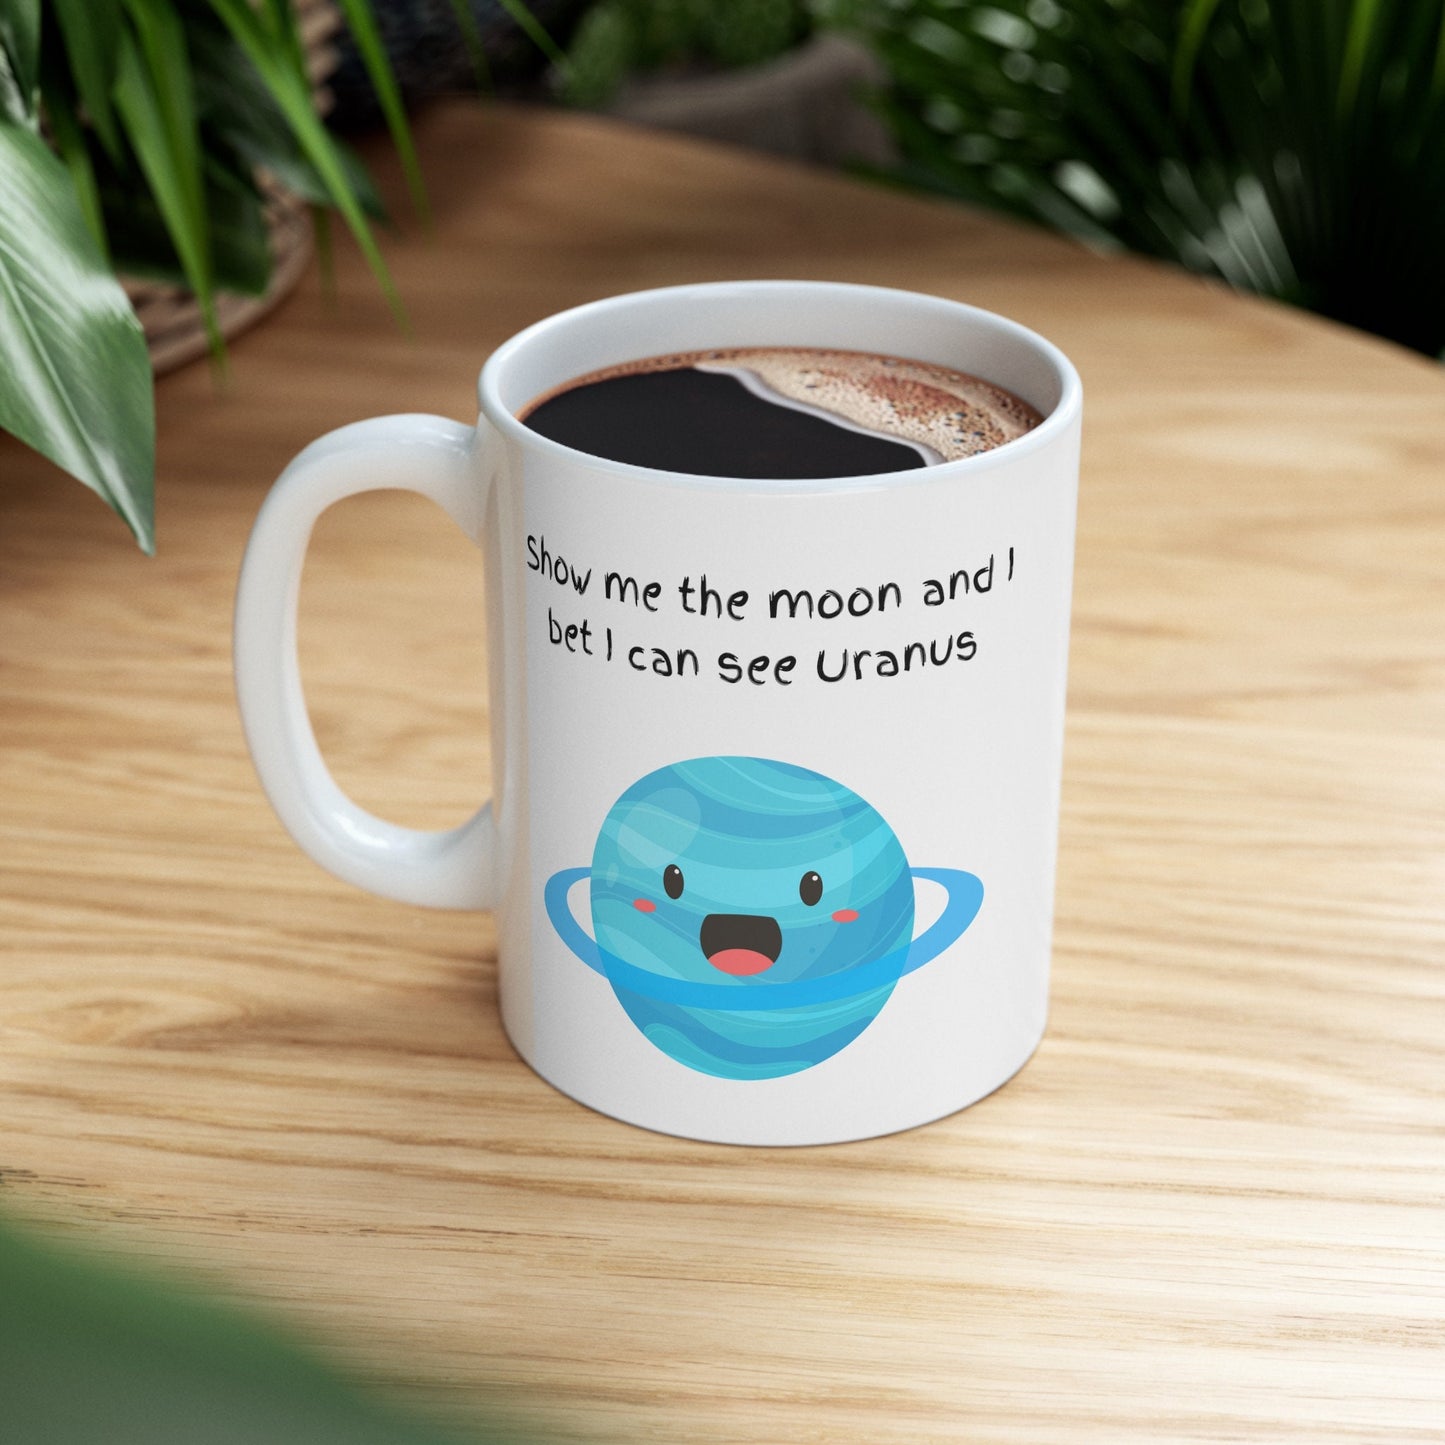 I Can see Uranus Coffee Mug, Uranus Mug, Cute Uranus Planet Mug, Funny Mug from Uranus, Drink from Uranus, Uranus Ceramic Mug,